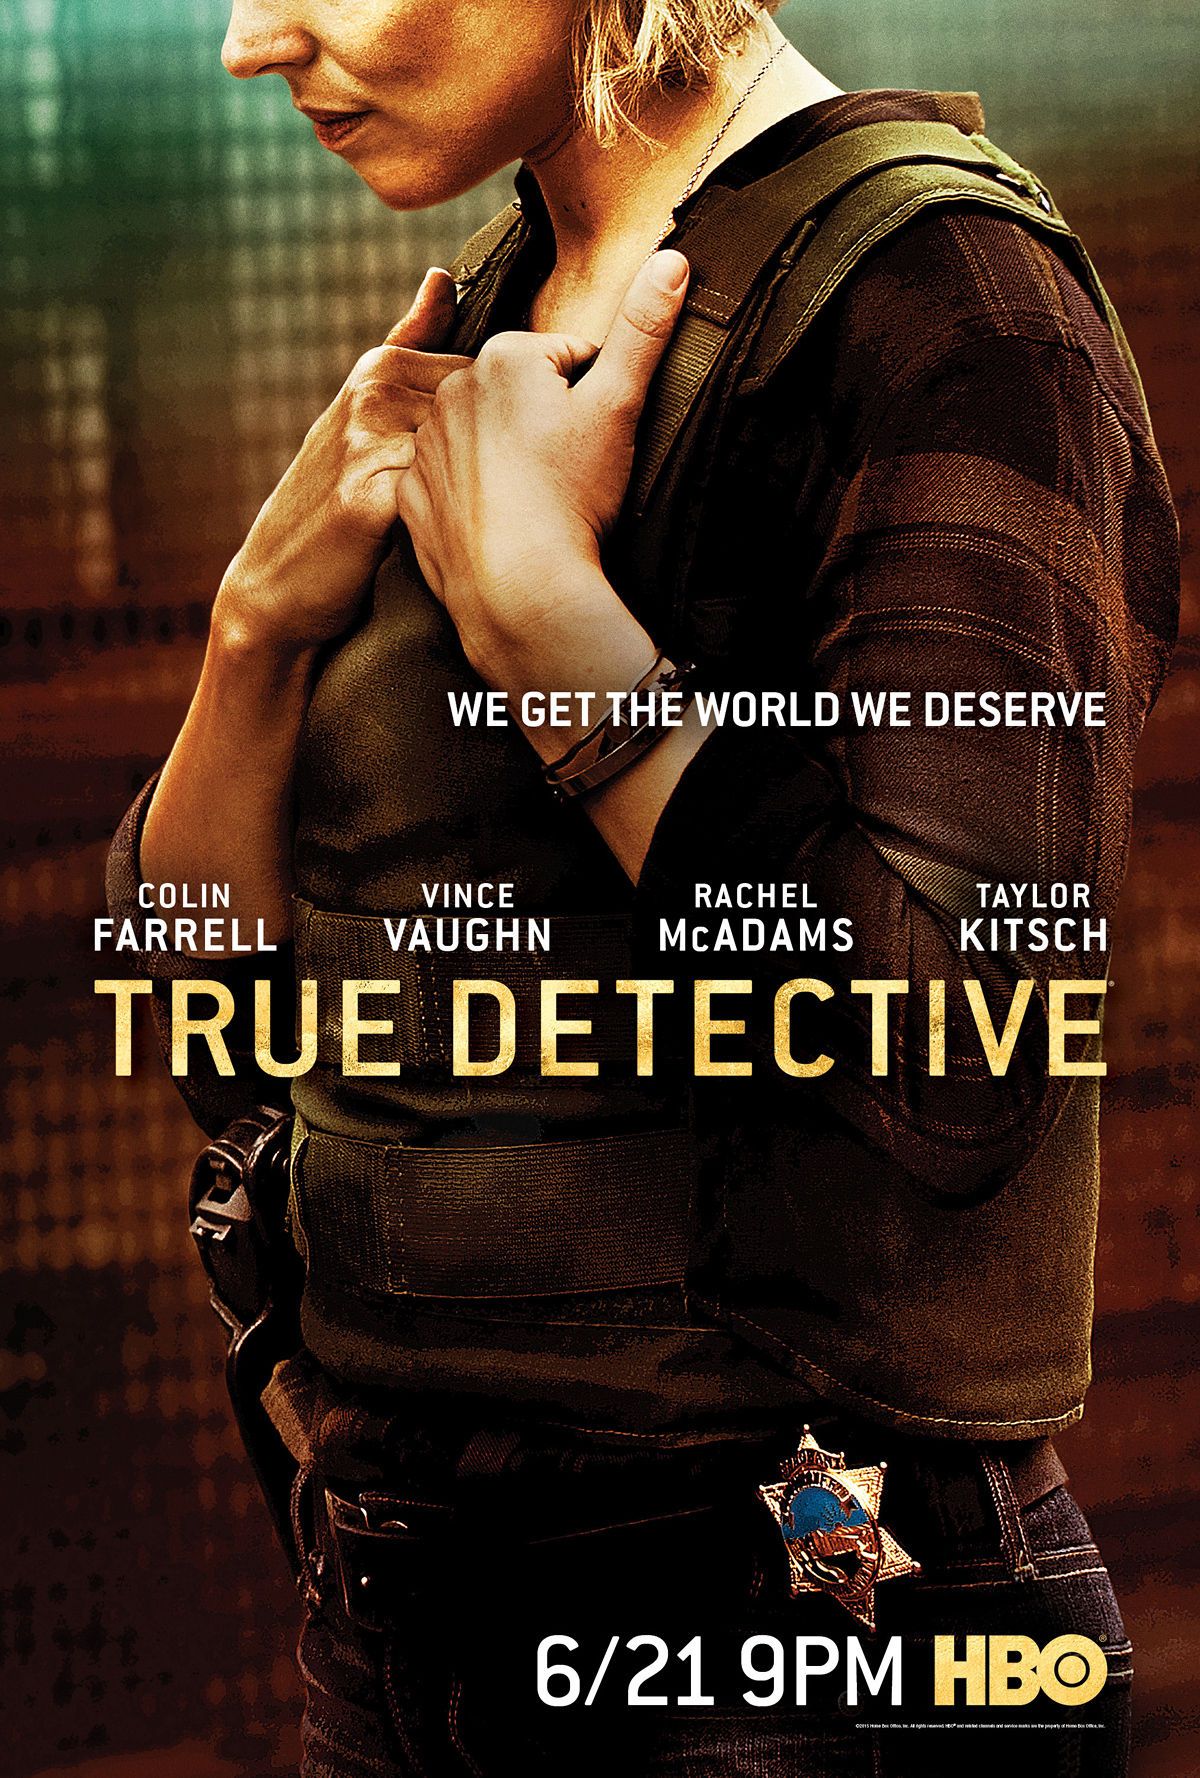 True Detective Season 2 - Rachel McAdams Character Poster